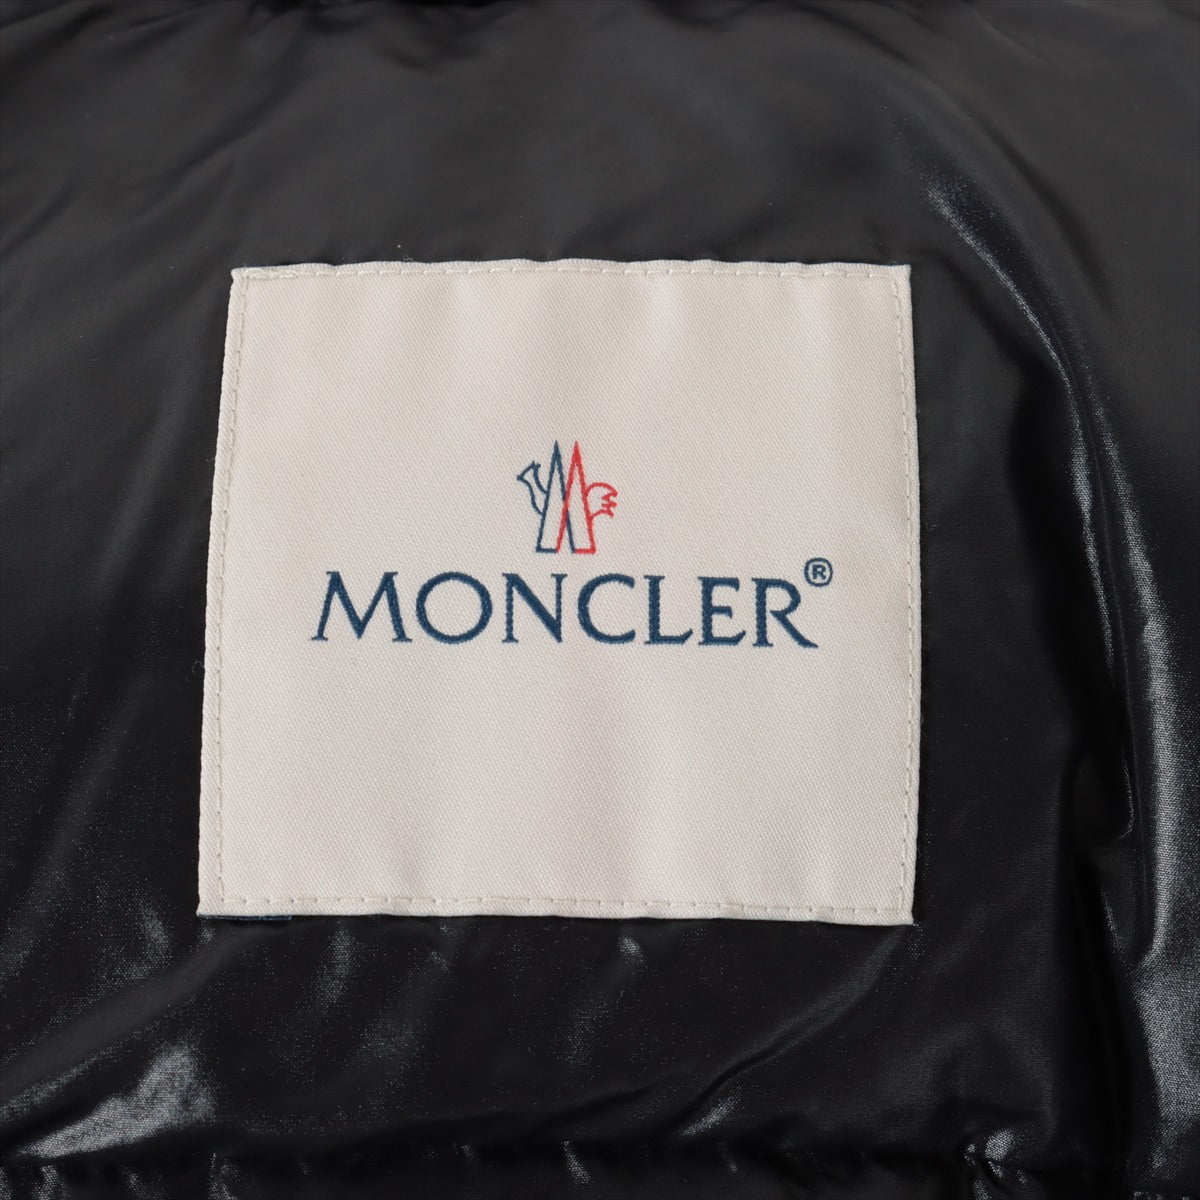 Moncler Genius Fragment HANTIUM 21 years Nylon Down jacket 1 Men's Black  Hood removal